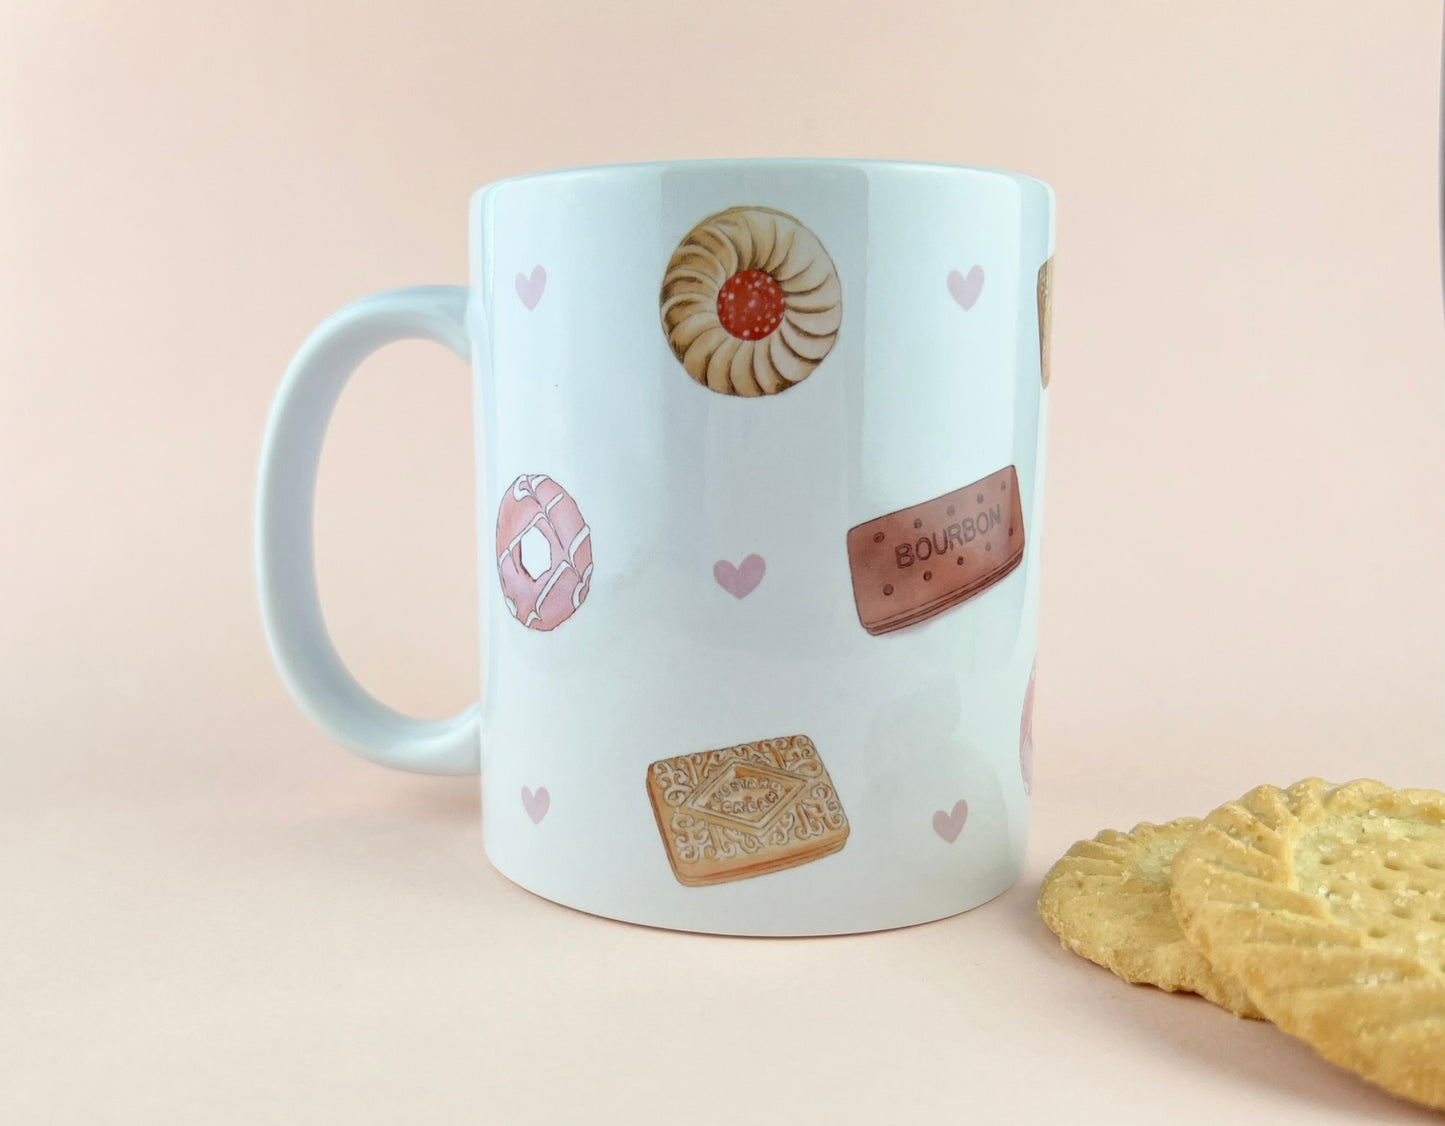 Biscuits Personalised Teacher Mug, Custom Mug, Customised Name Cup, Mrs Gift, Gift for Teacher Friend, Thank You Teacher Gift, End of Term